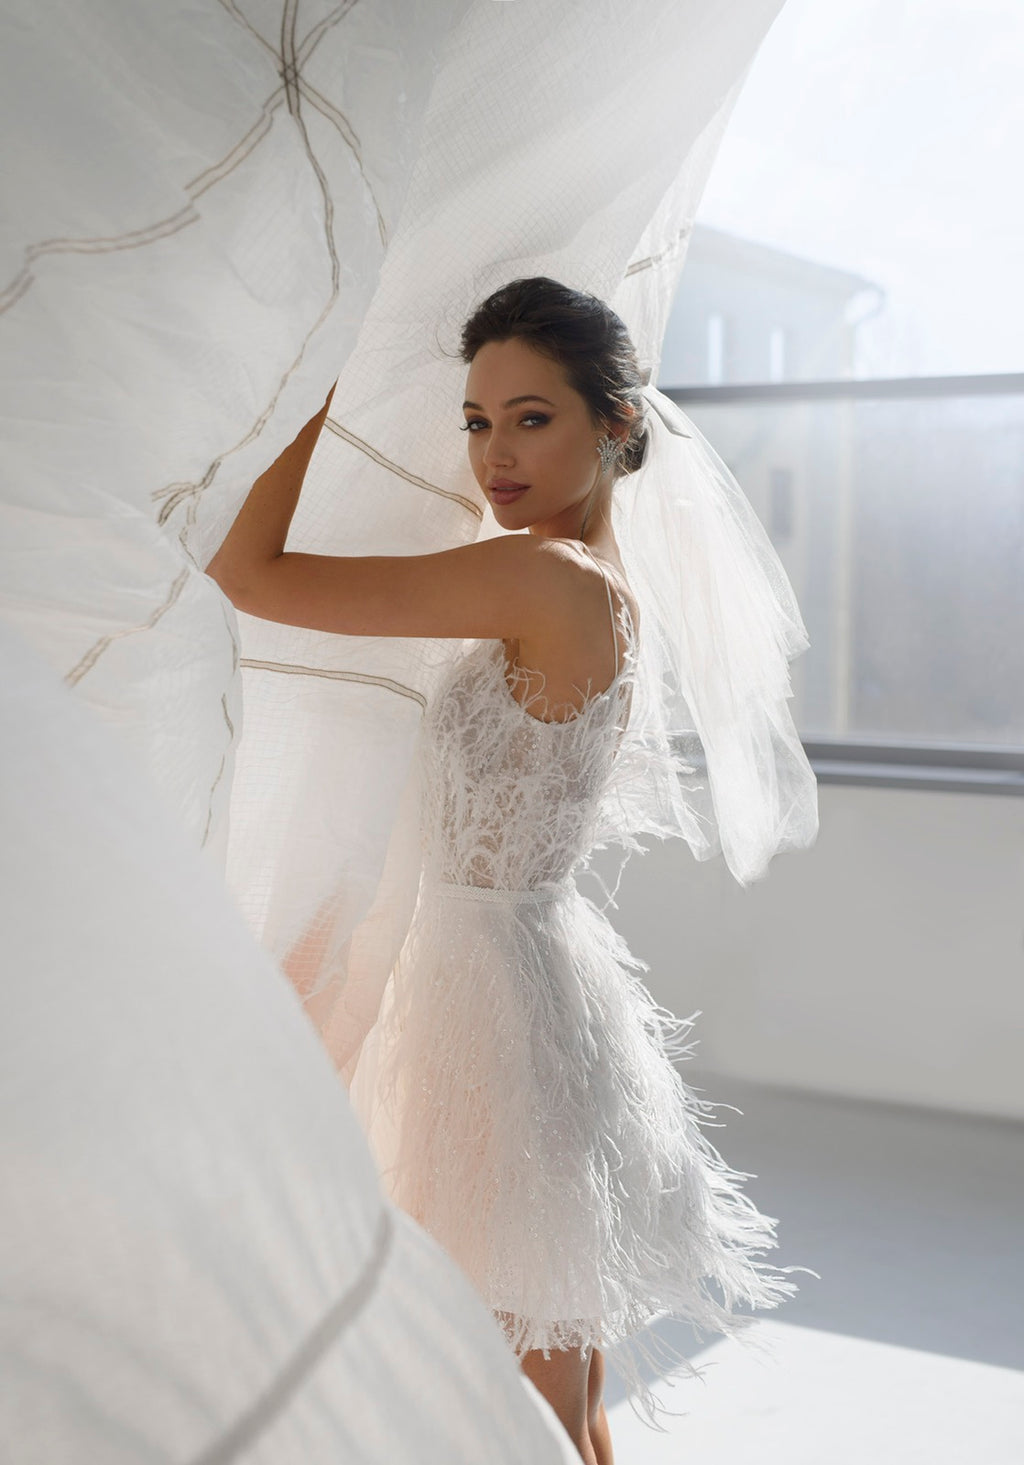 Short wedding dress online. Wedding dress with feathers. Short wedding dress